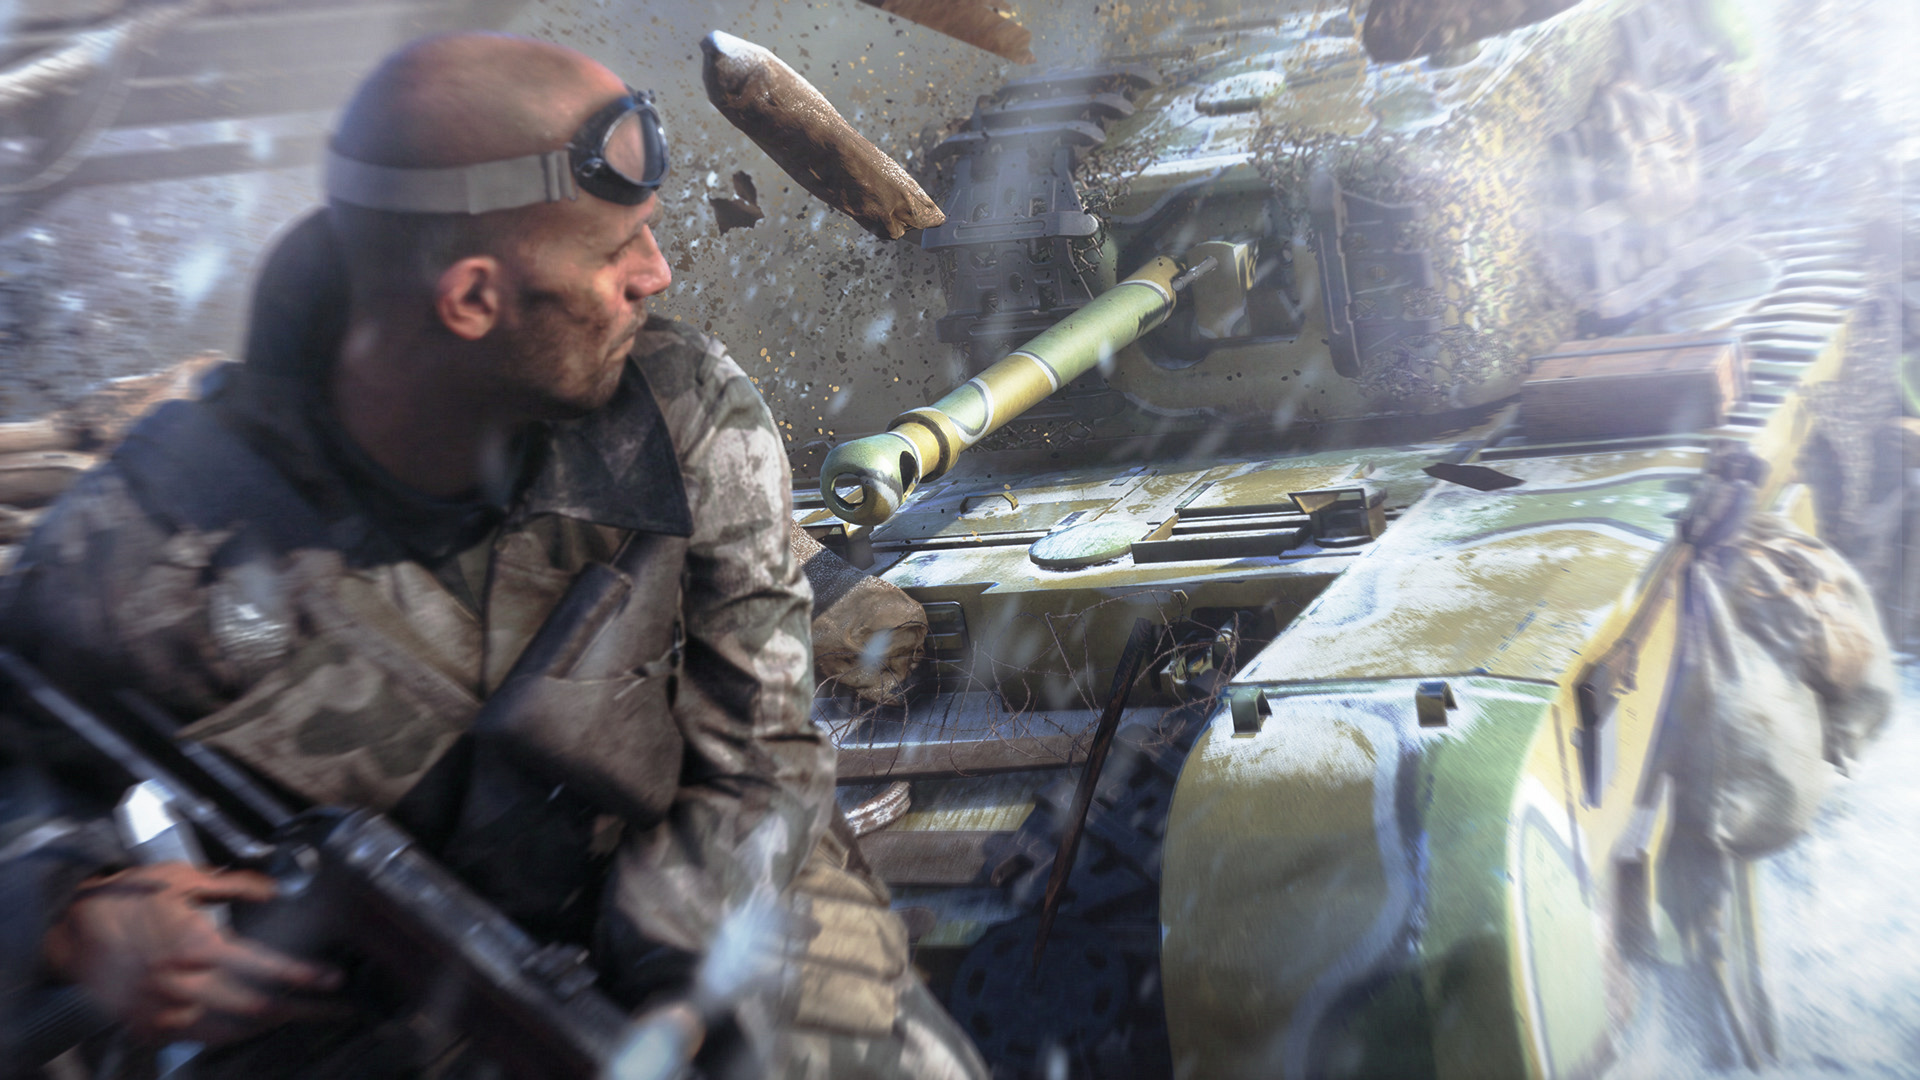 Battlefield V MultiPlayer (PS5) 